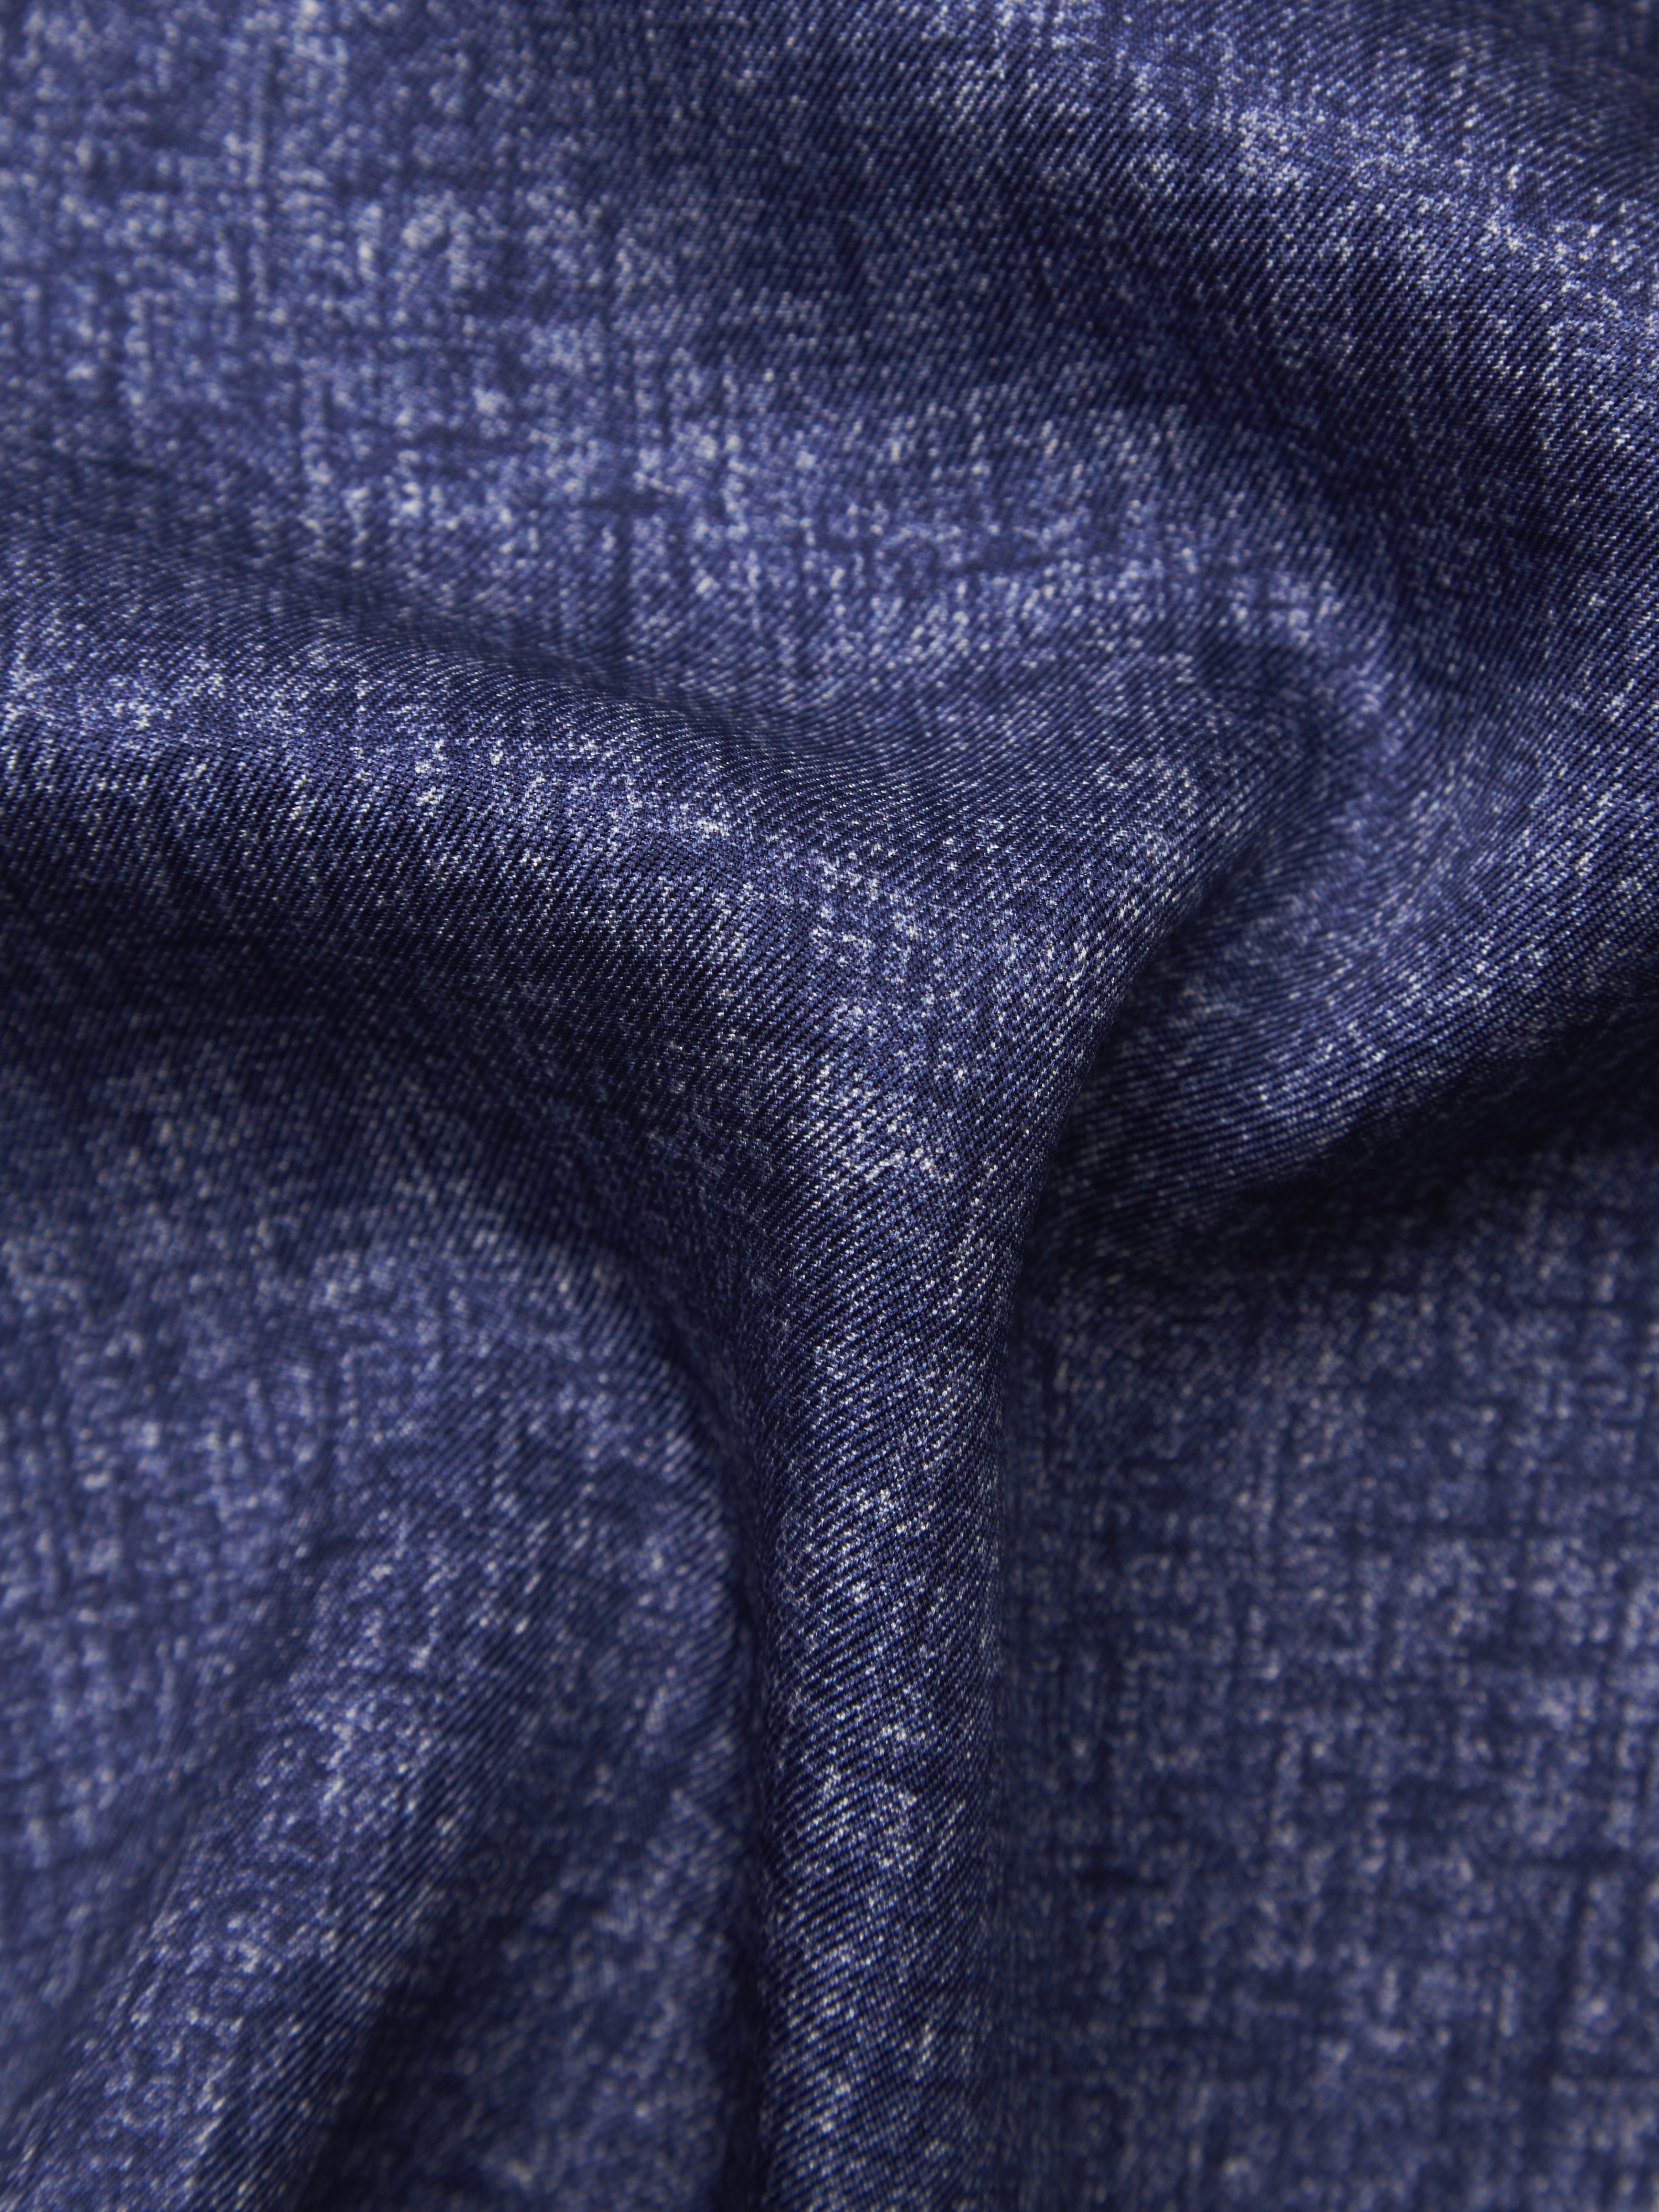 Vuitton Blue/Gray Silk Pocket Square